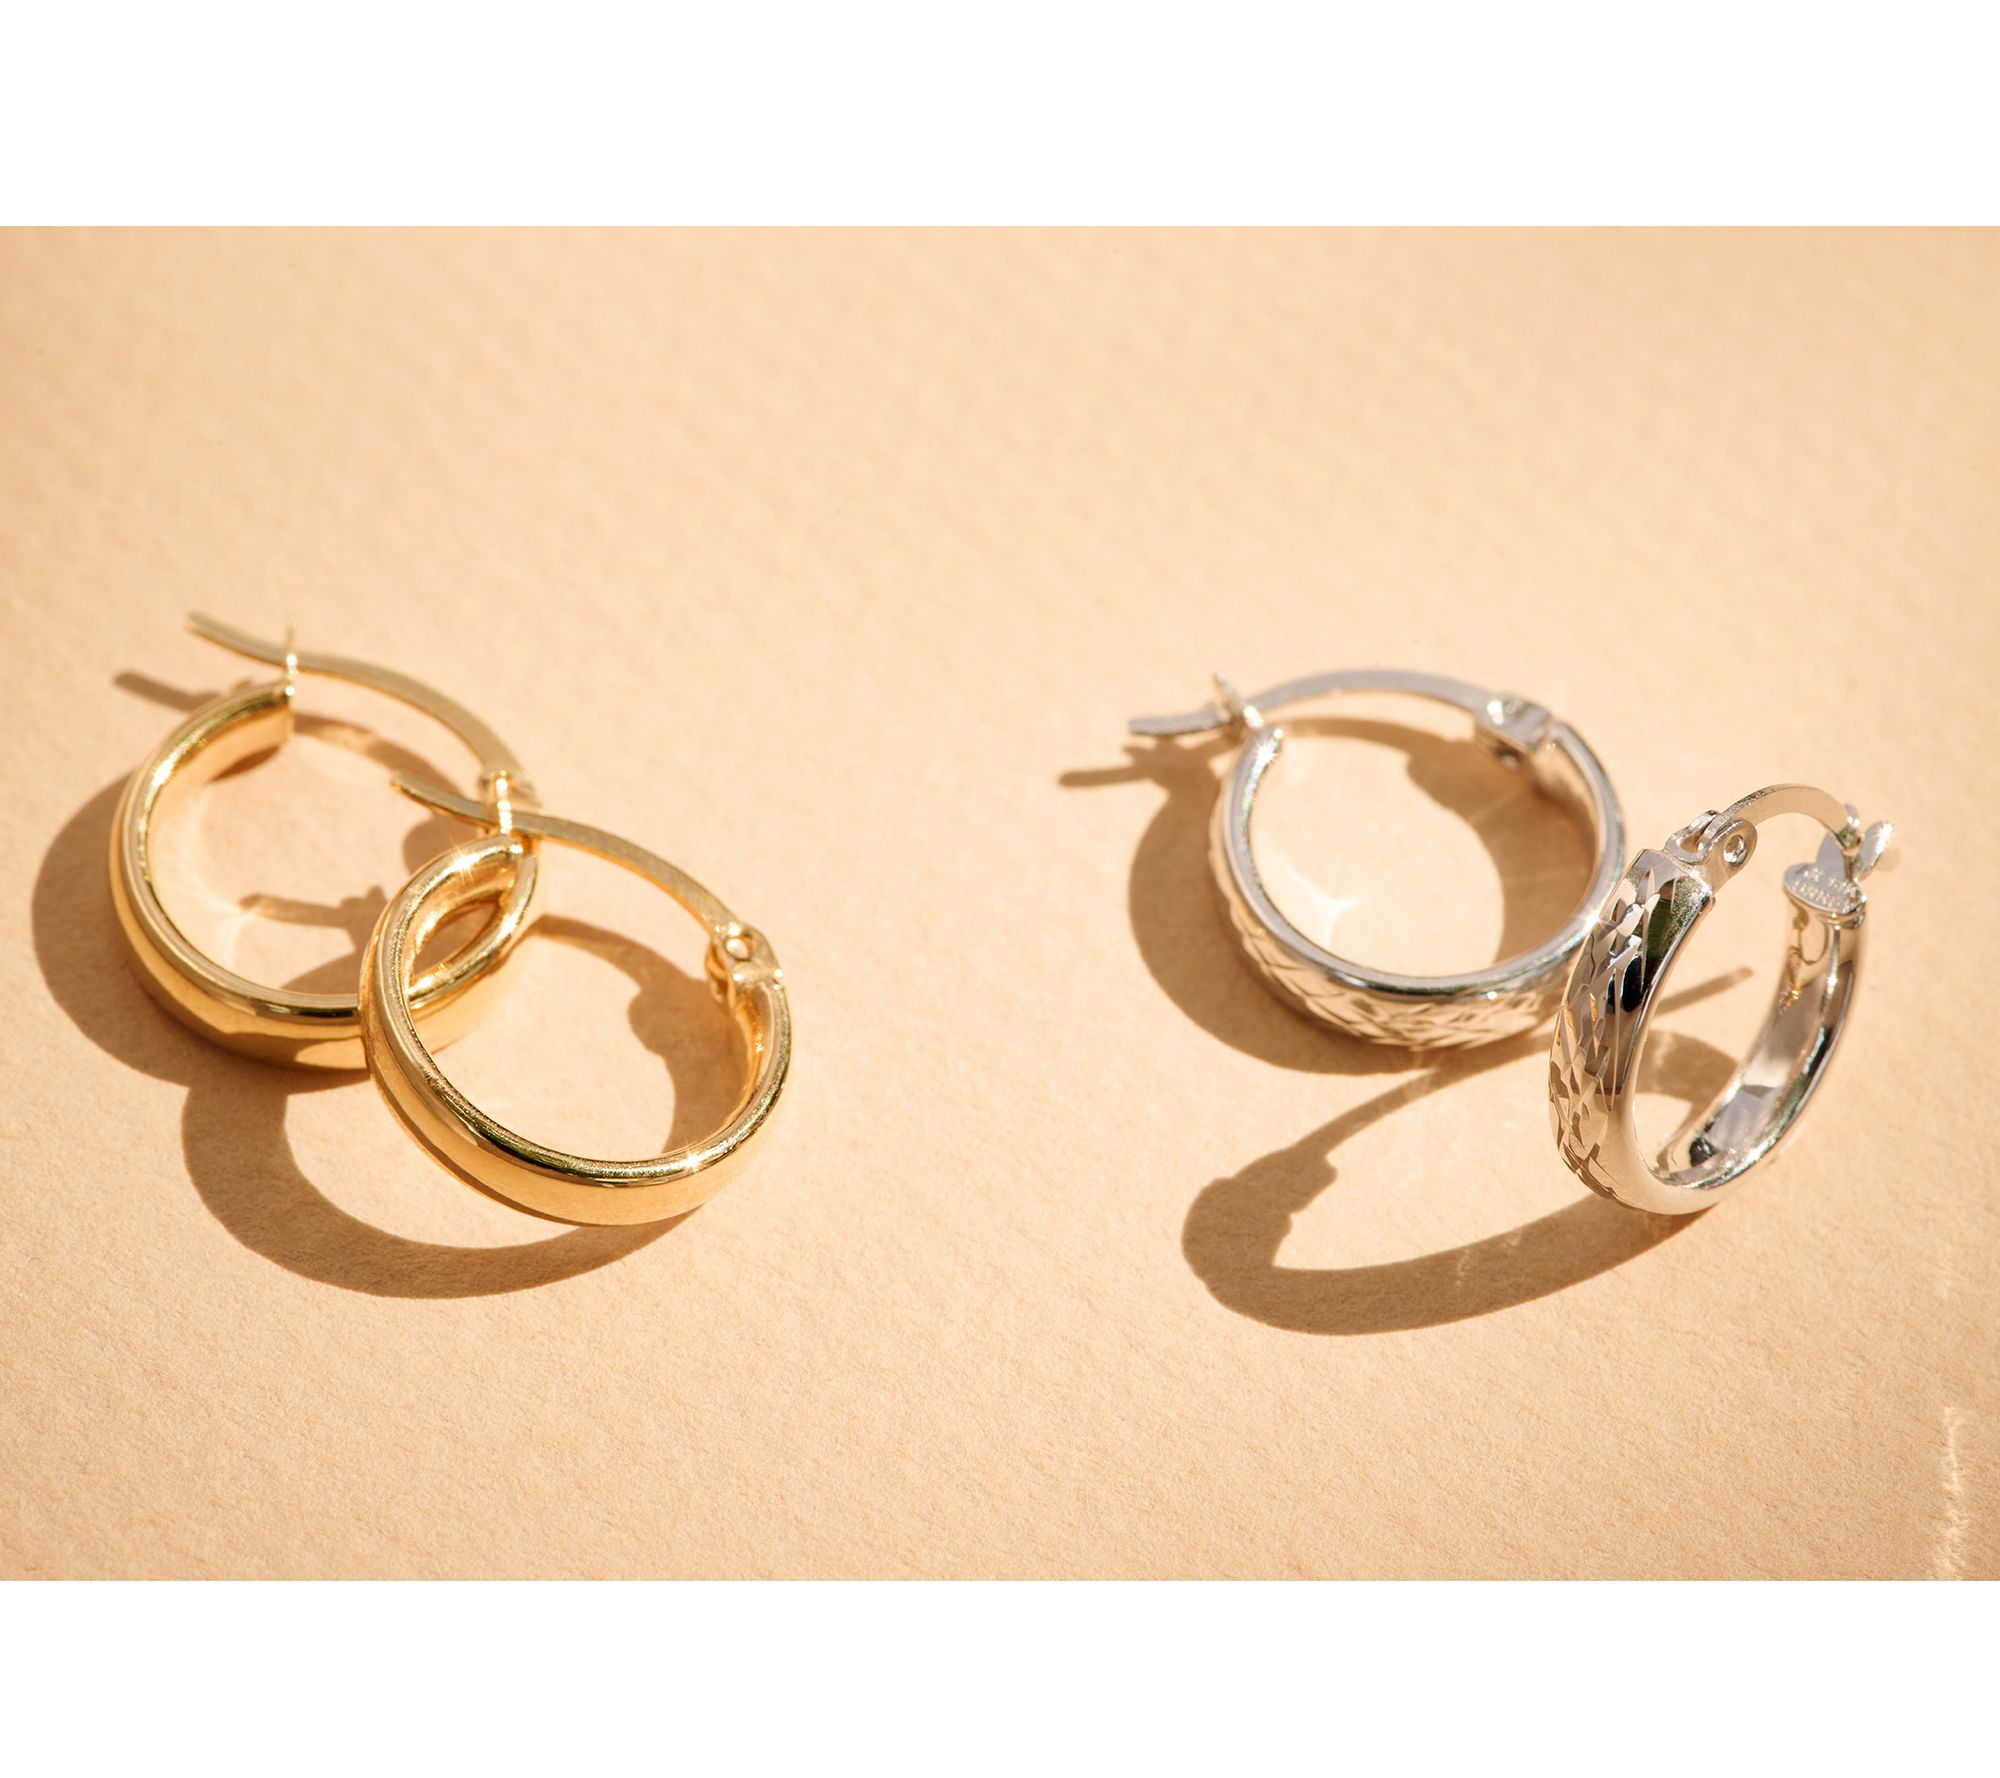 Adorna 14K Gold 2 Polished or Diamond Cut Hoop Earrings 